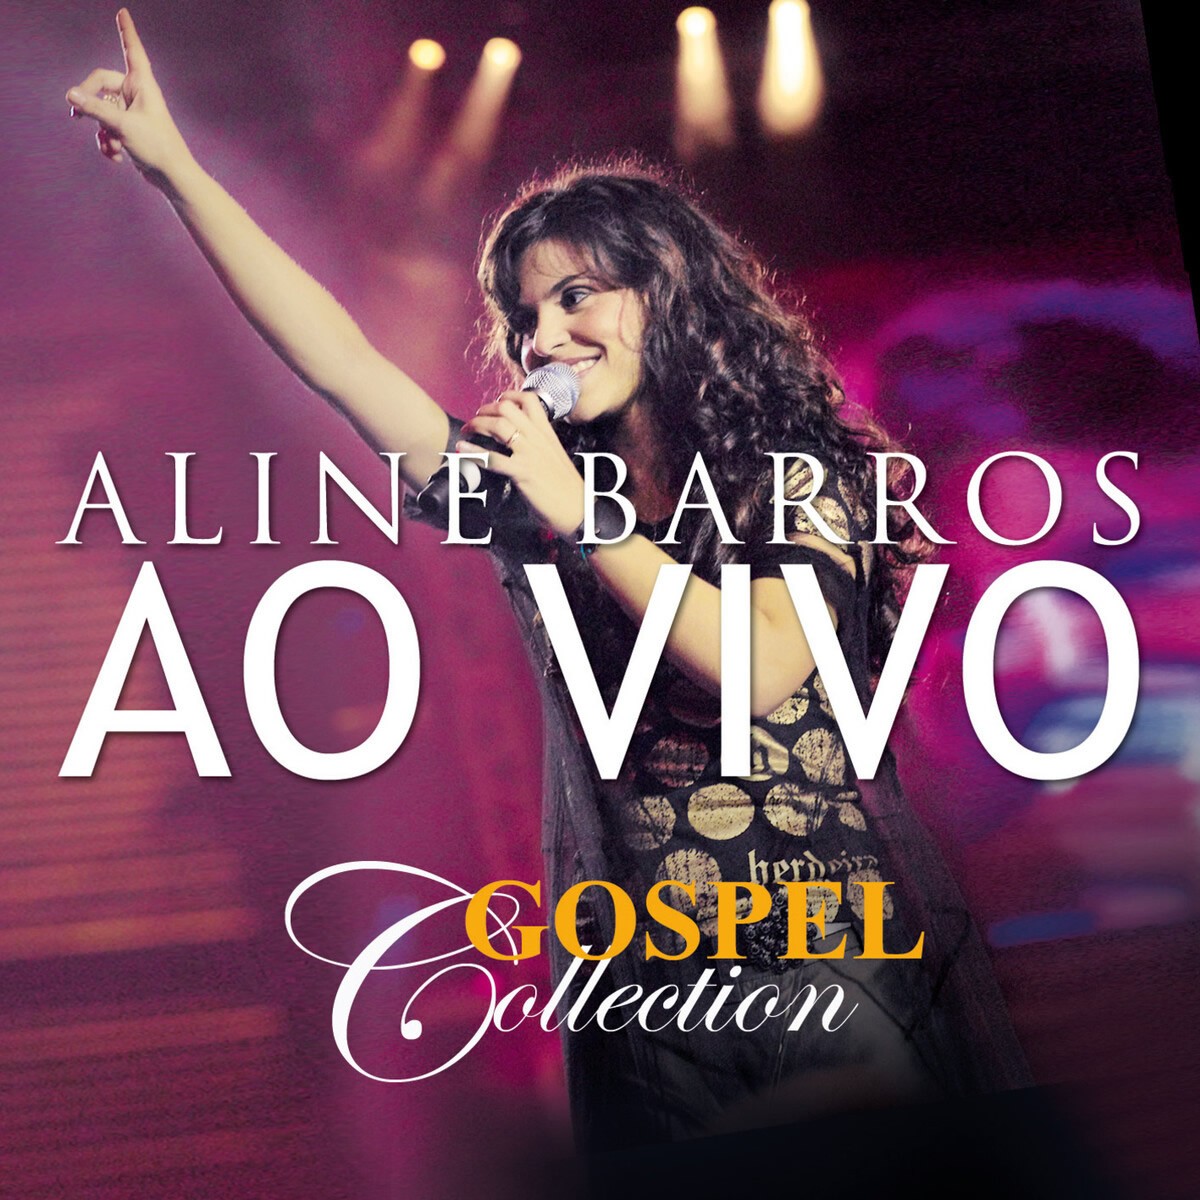 Download Aline Barros - Gospel Collection Ao Vivo [Mp3 Gospel] via Torrent